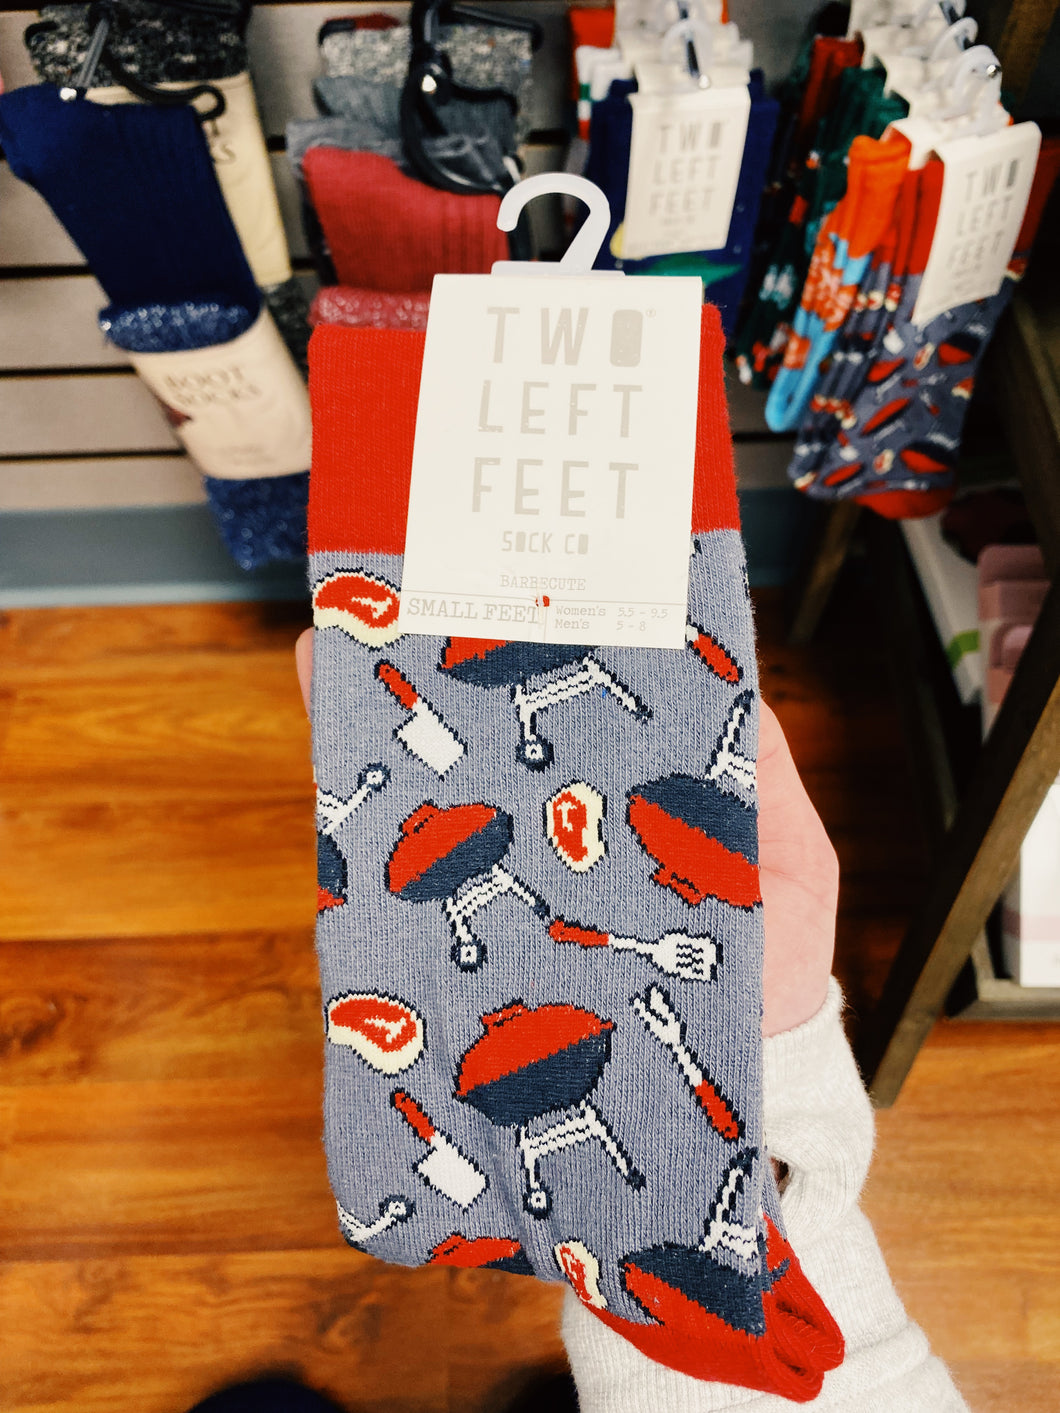 Two Left Feet— BBQ Socks